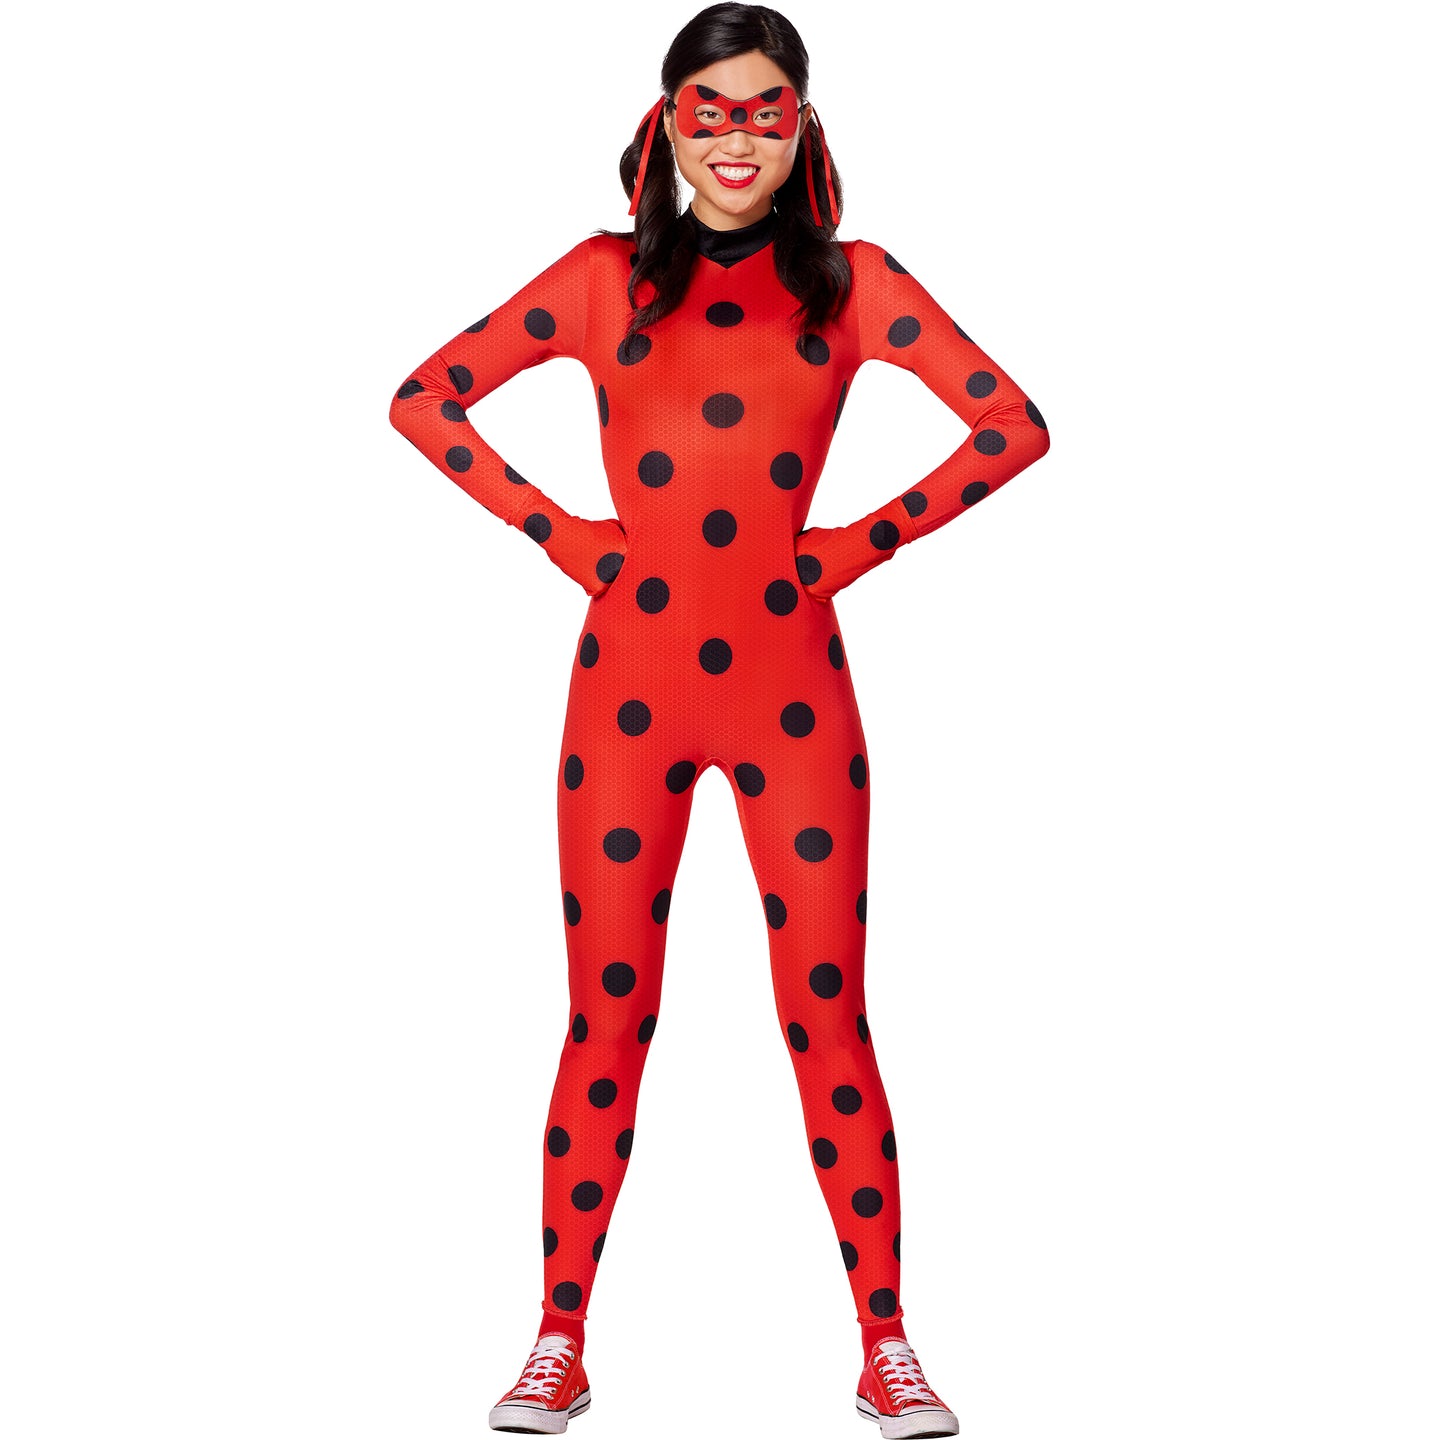 InSpirit Designs Adult Miraculous Ladybug Costume